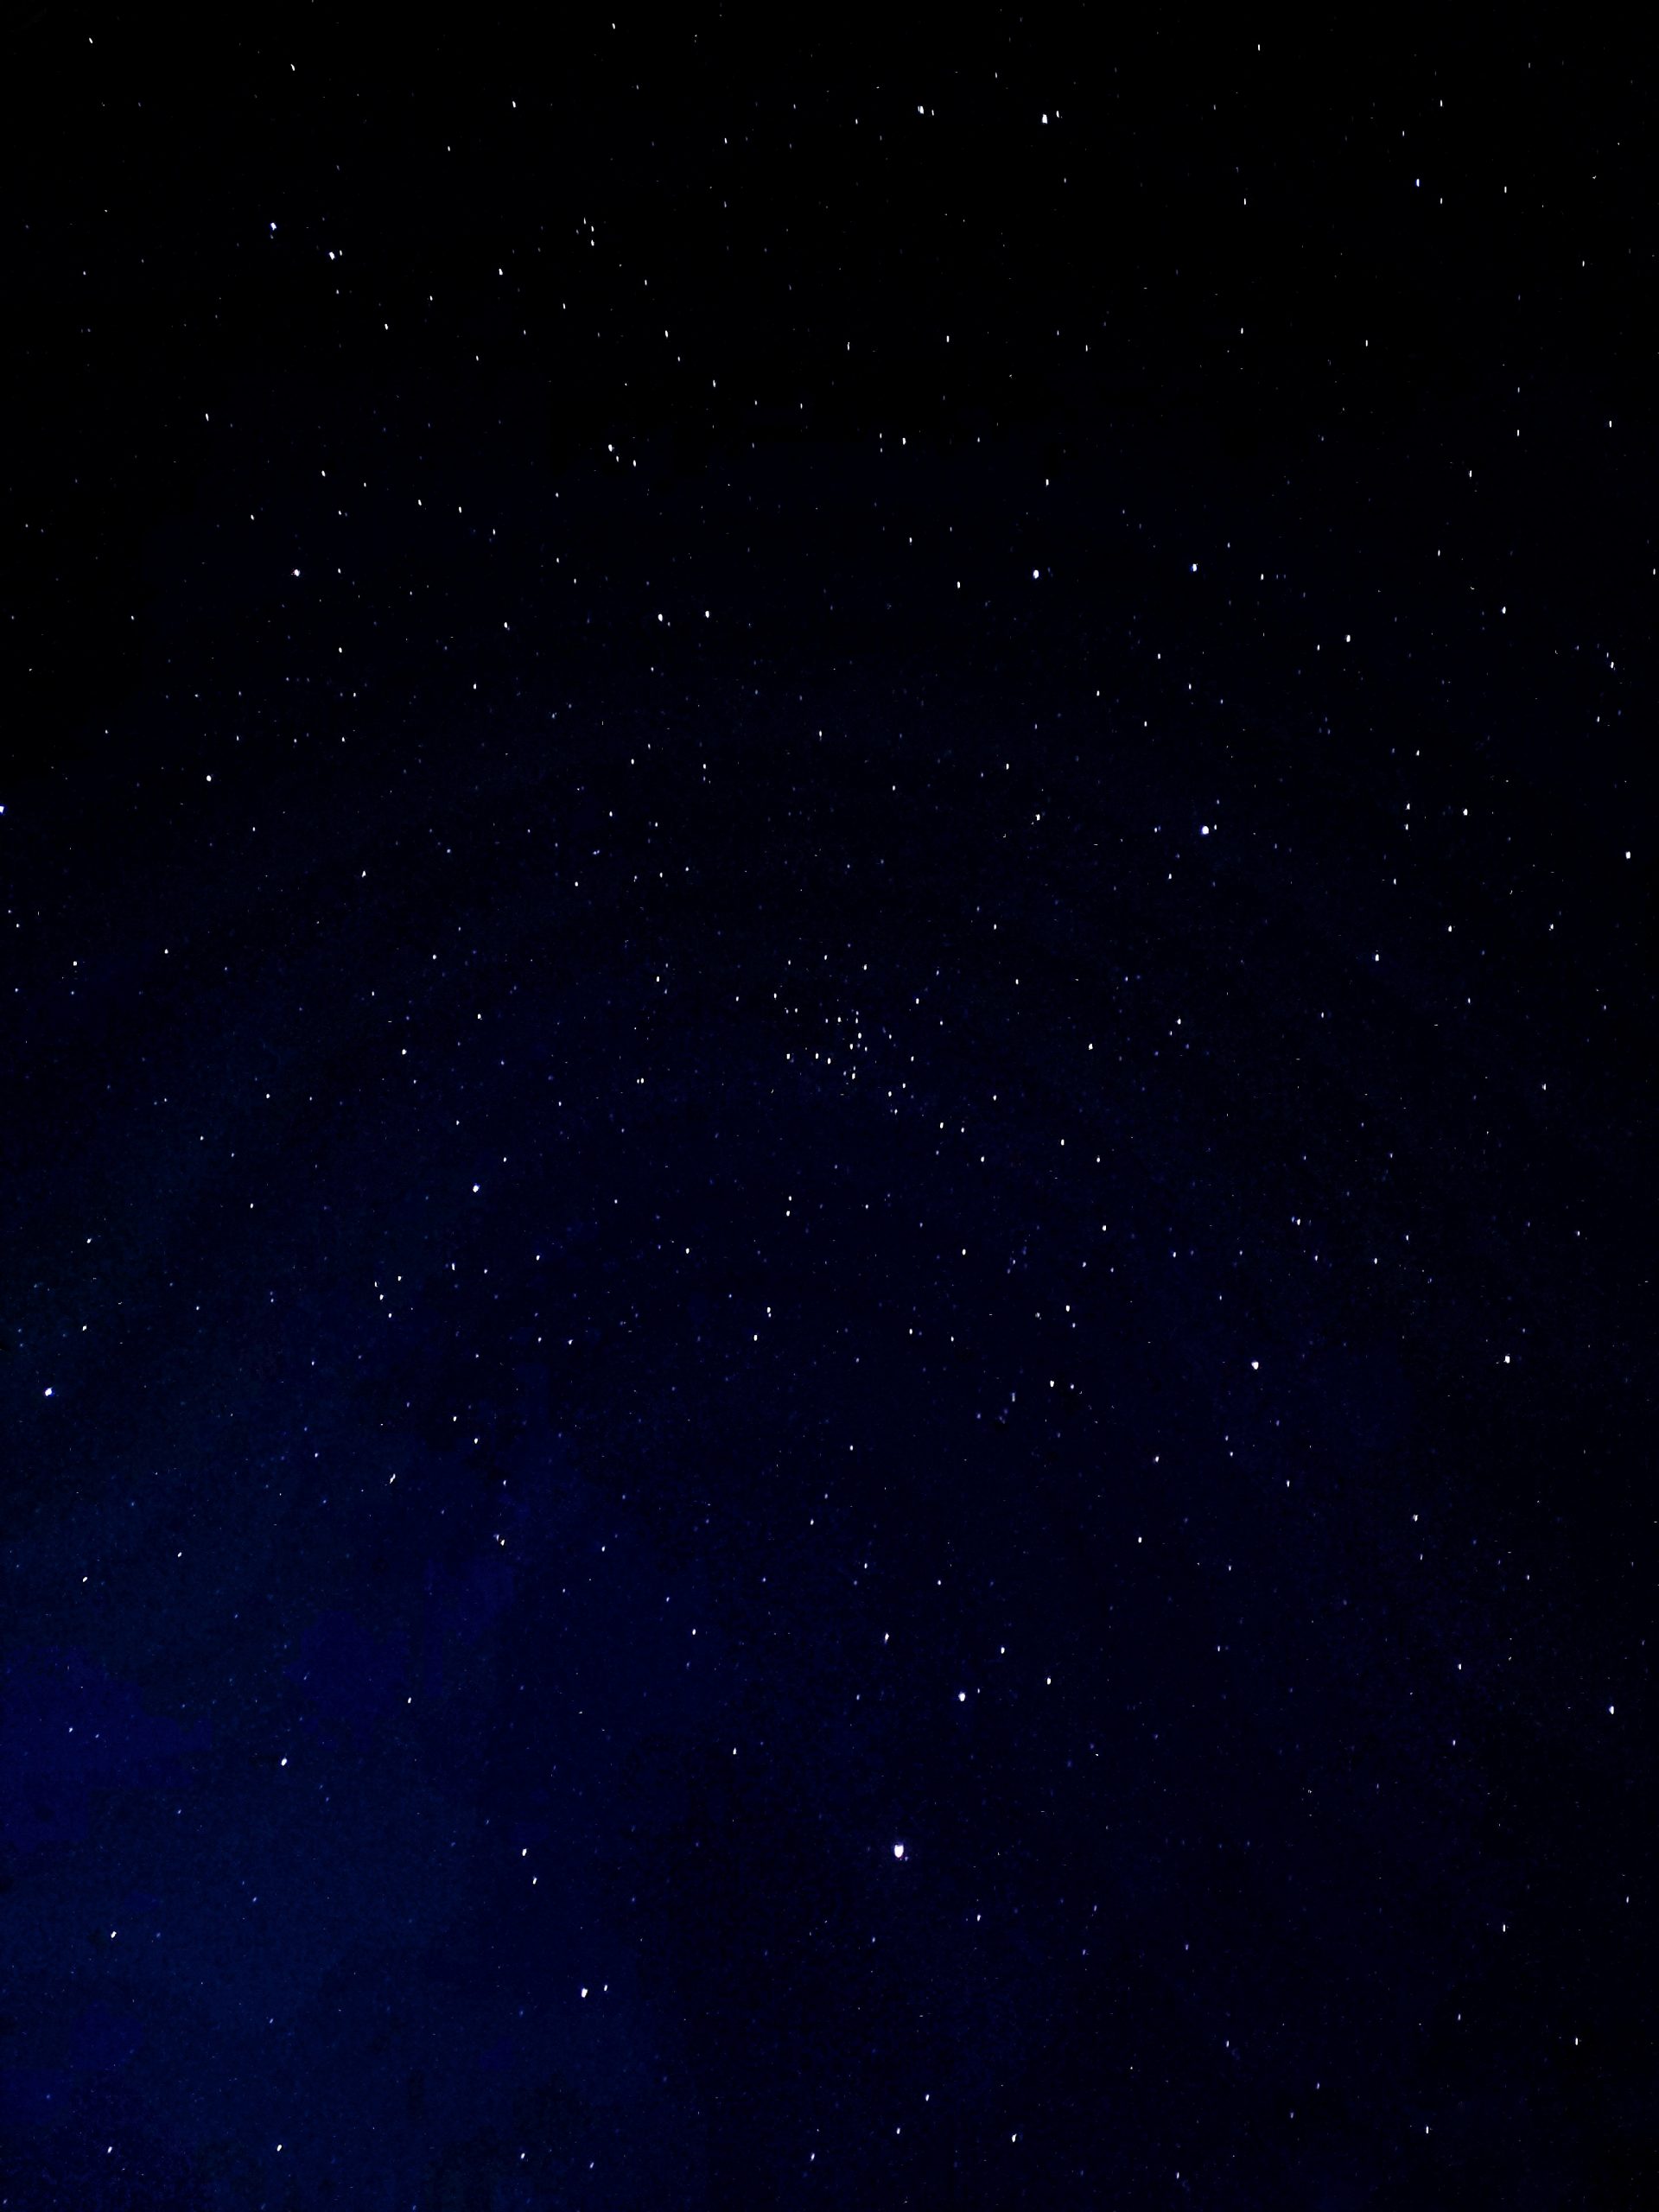 Dark Blue Night Sky with Stars